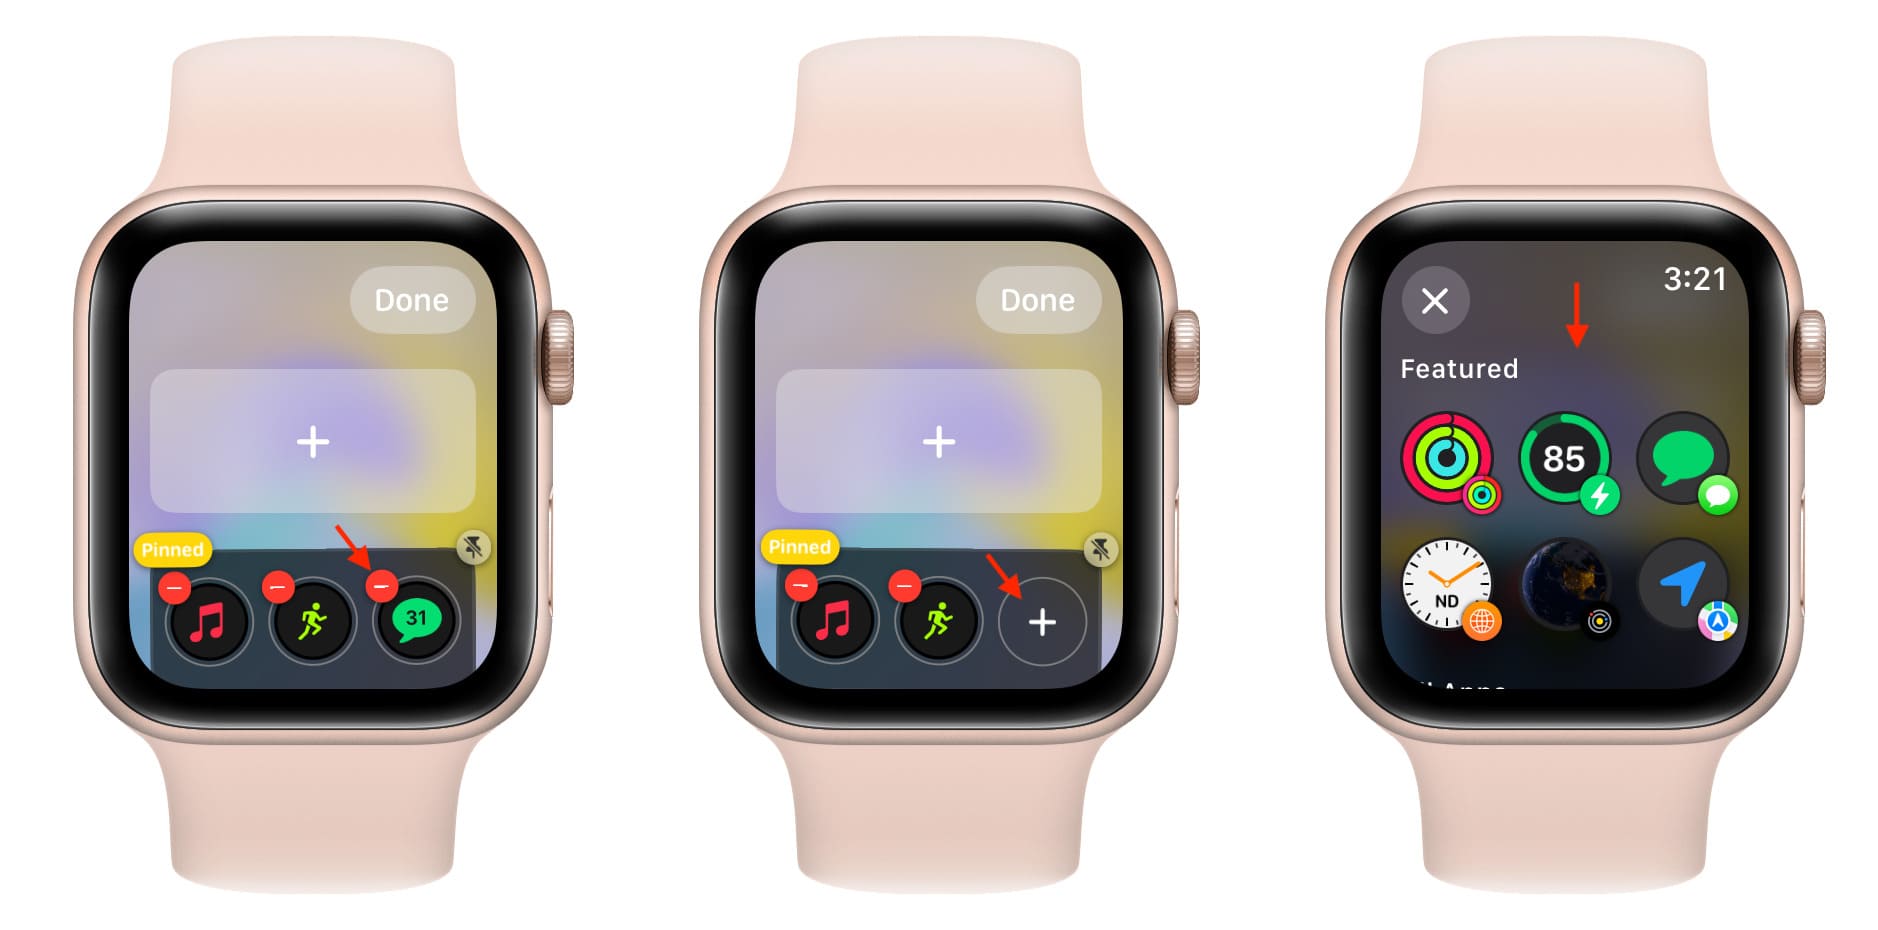 Customize the app launcher widget on Apple Watch